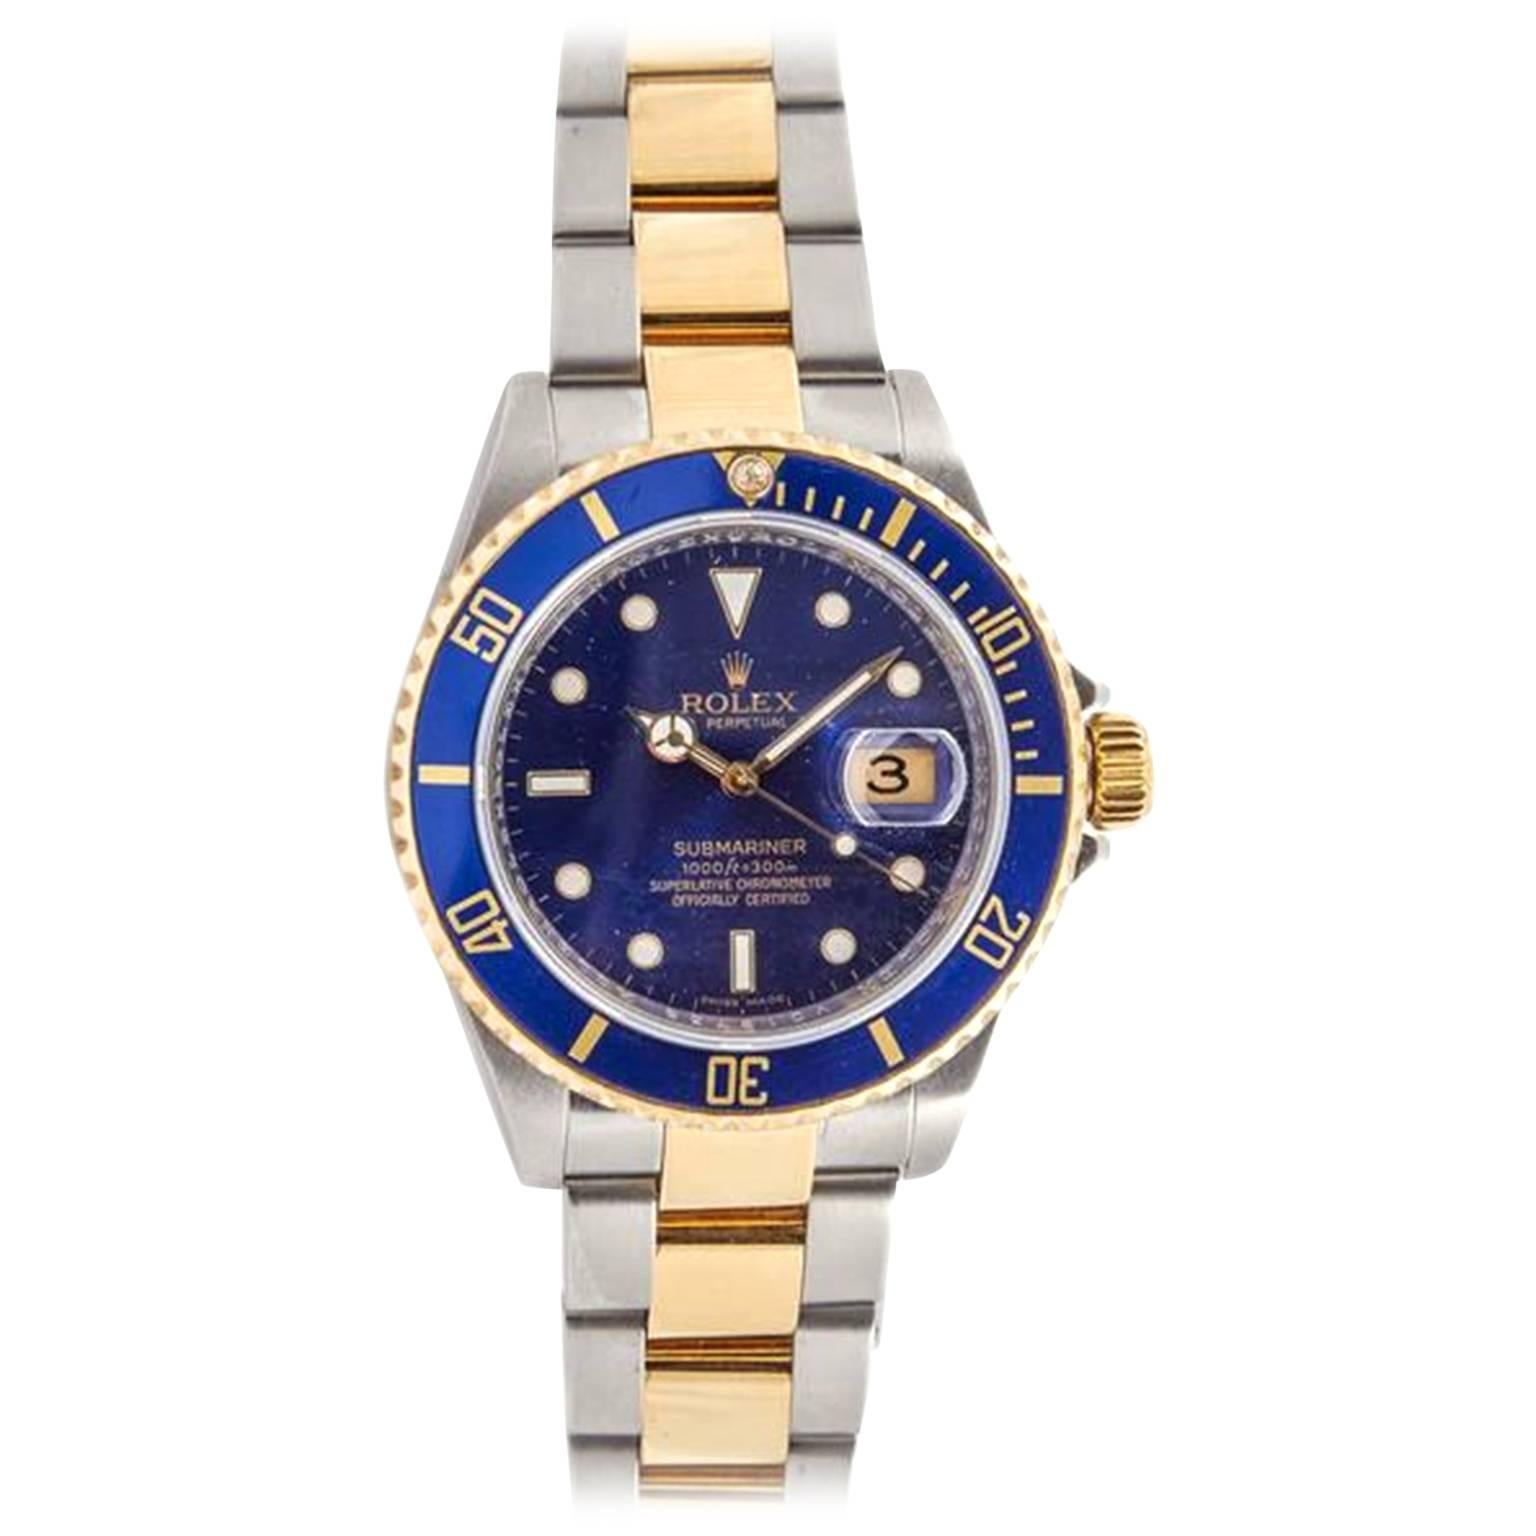 Rolex Submariner Ref. 16613T Two-Tone 'Blue on Blue" Wristwatch